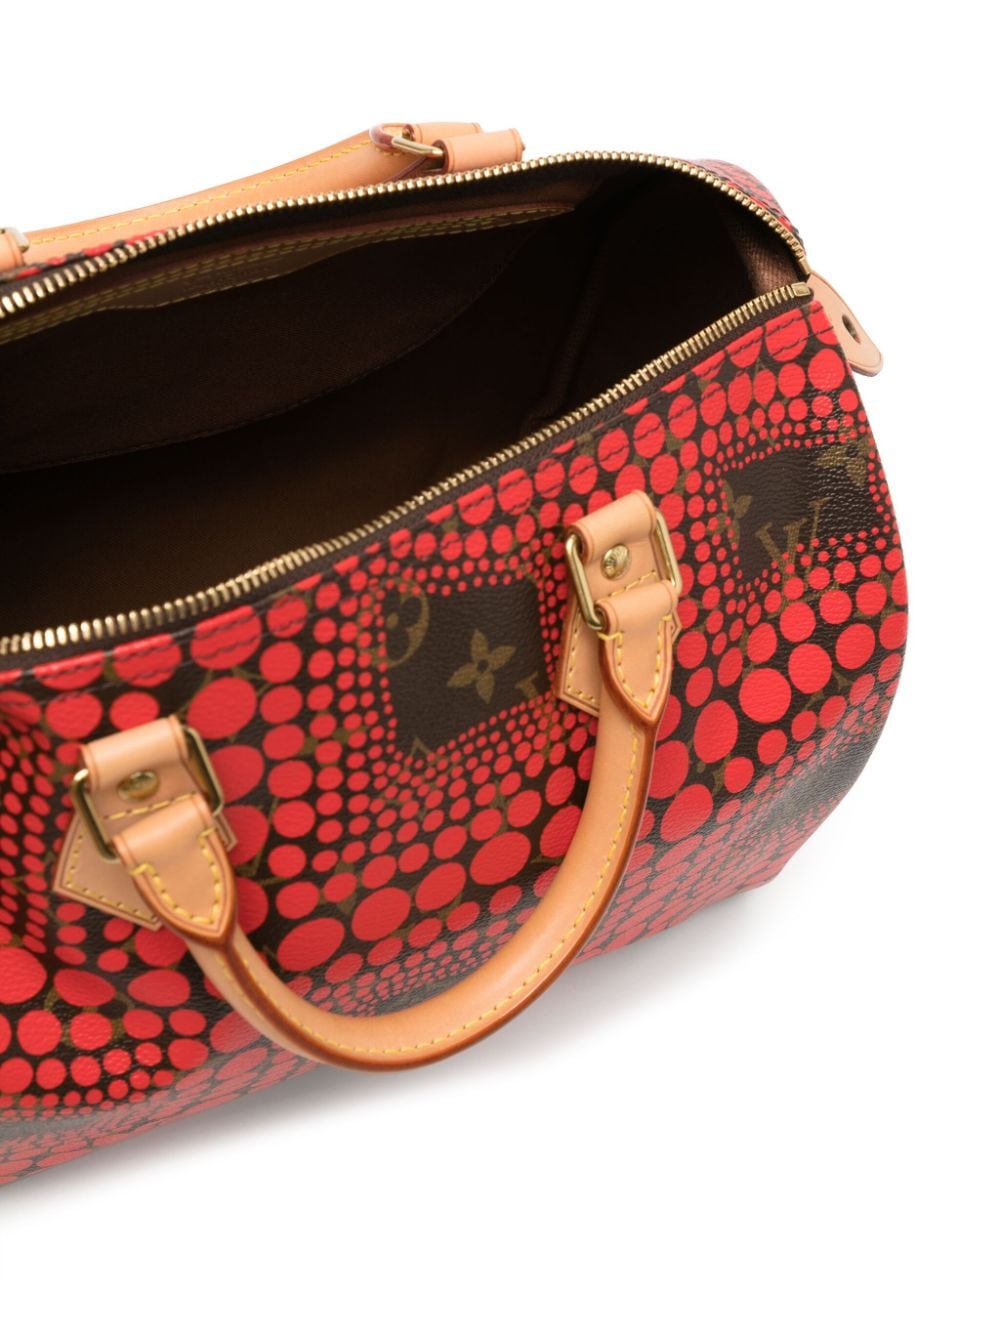 Louis Vuitton x Yayoi Kusama Pre-owned Polka Dots Speedy 30 Handbag - Red